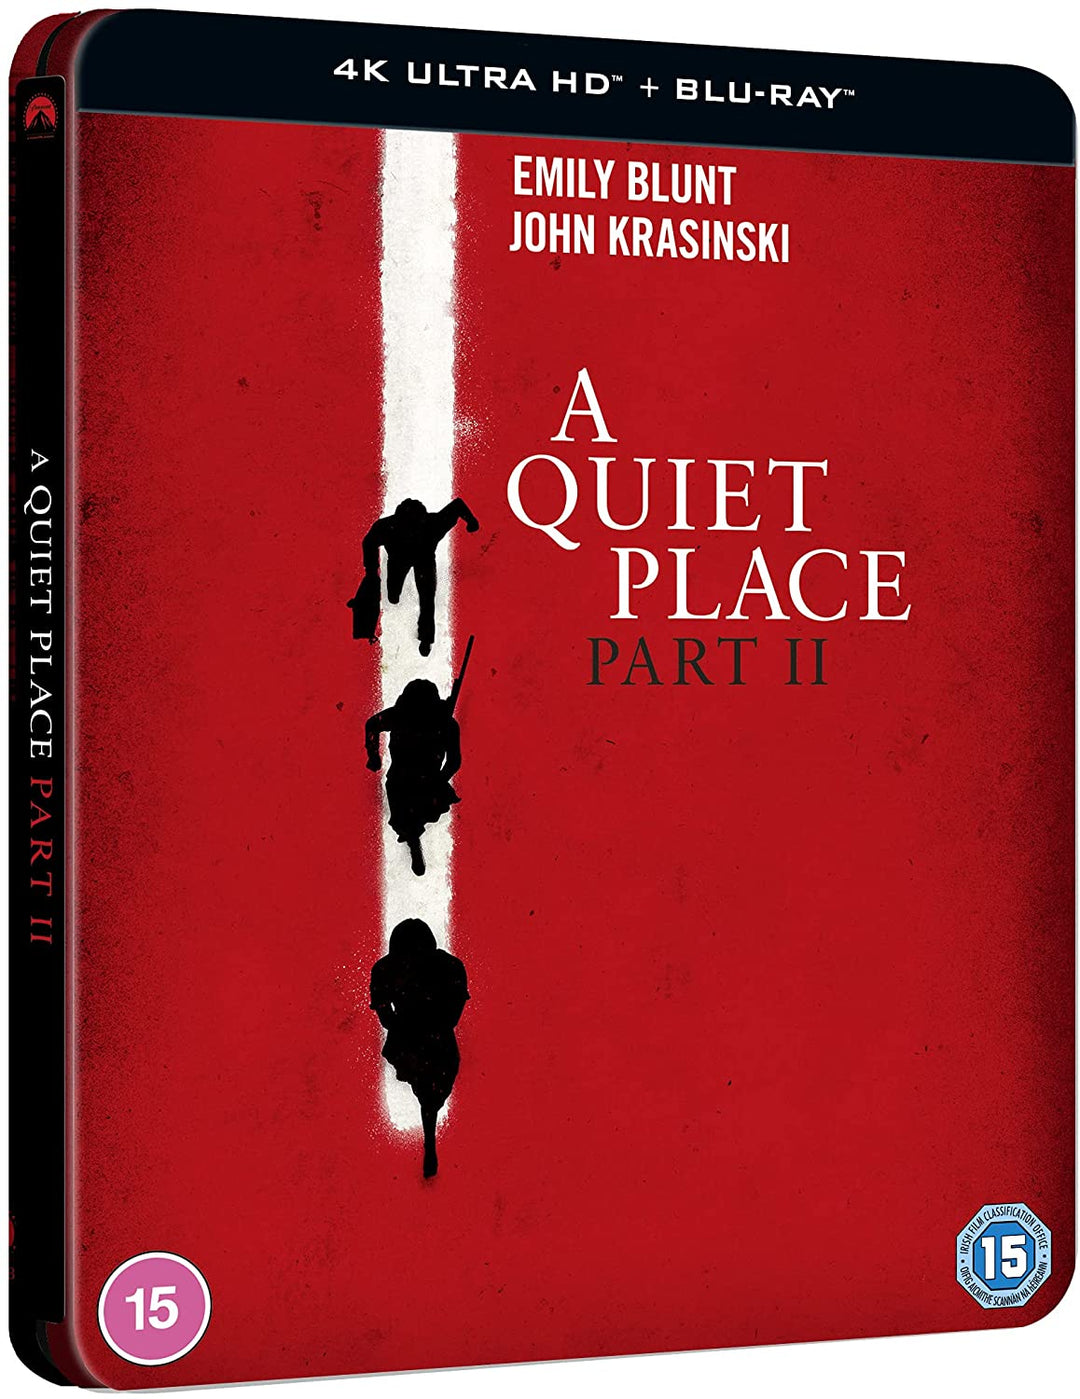 A Quiet Place Part II 4K UHD Steelbook - Horror/Sci-fi [Blu-ray]